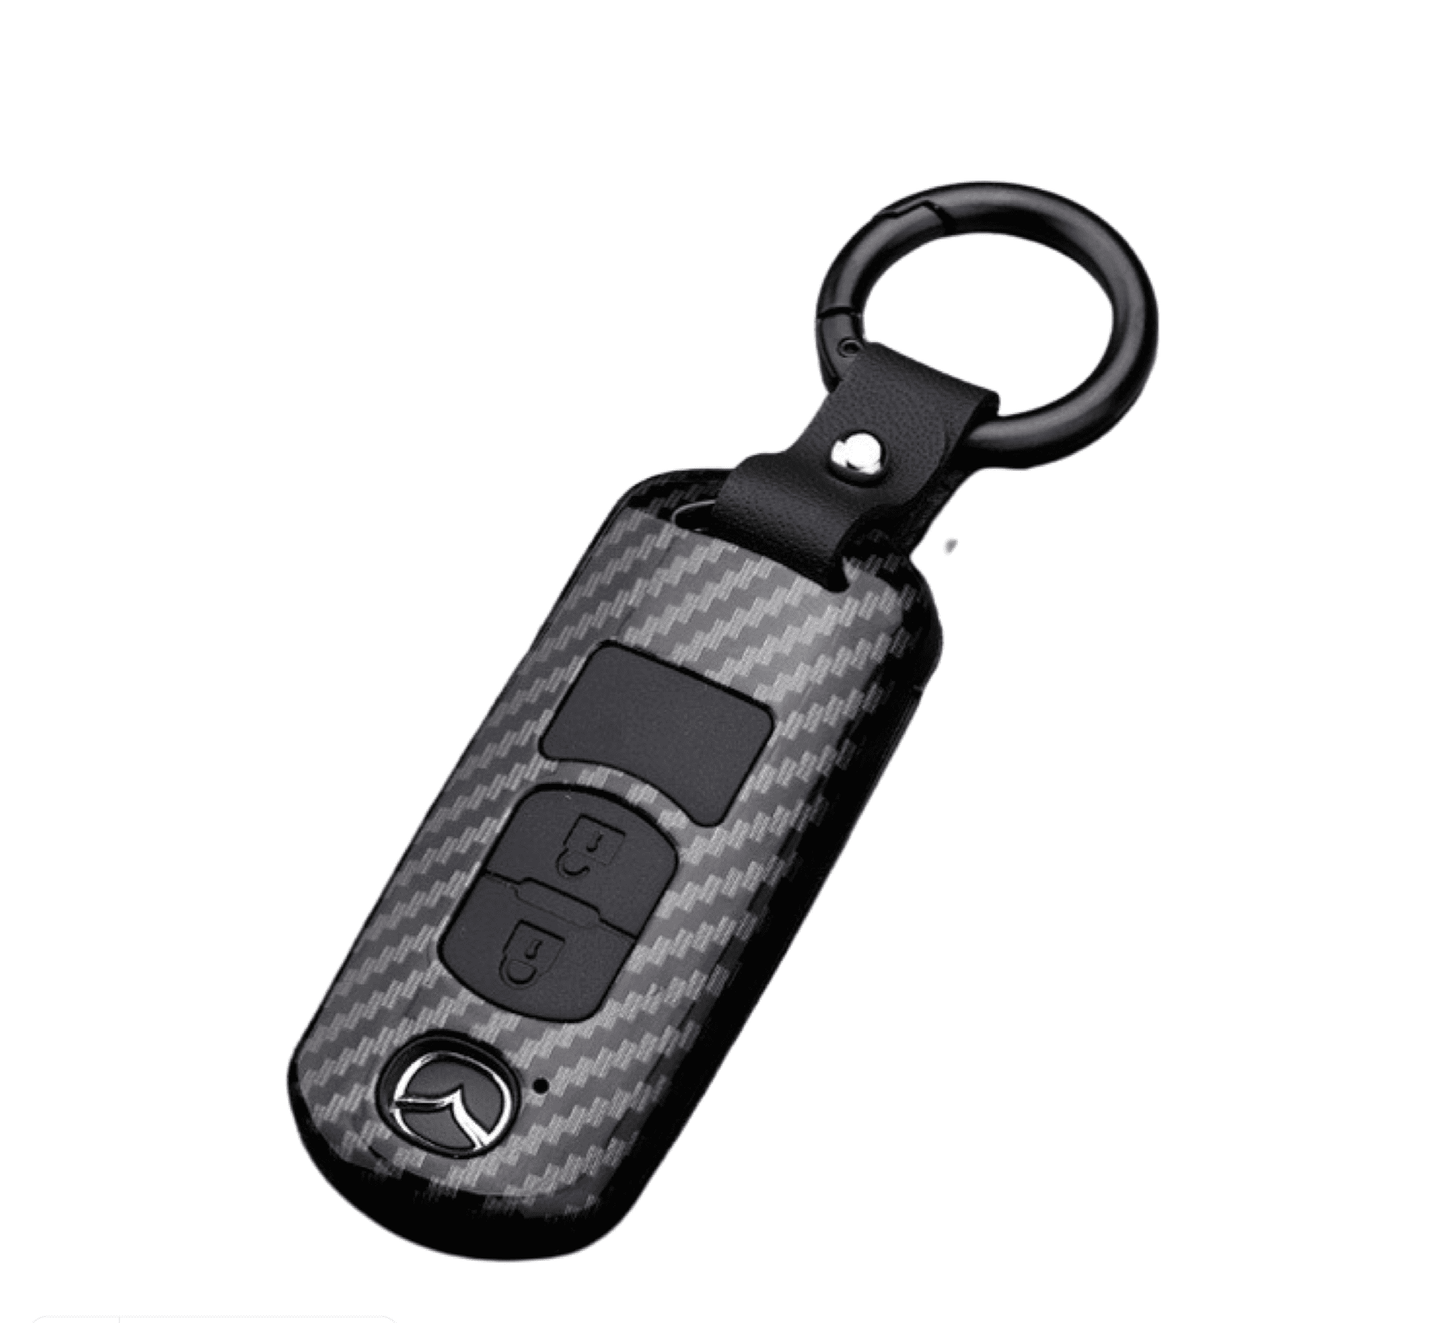 Mazda key cover | Mazda 3, 2, 6, CX-3, CX-5 car key cover | Carbon fibre design black | Mazda Accessories - Keysleeves